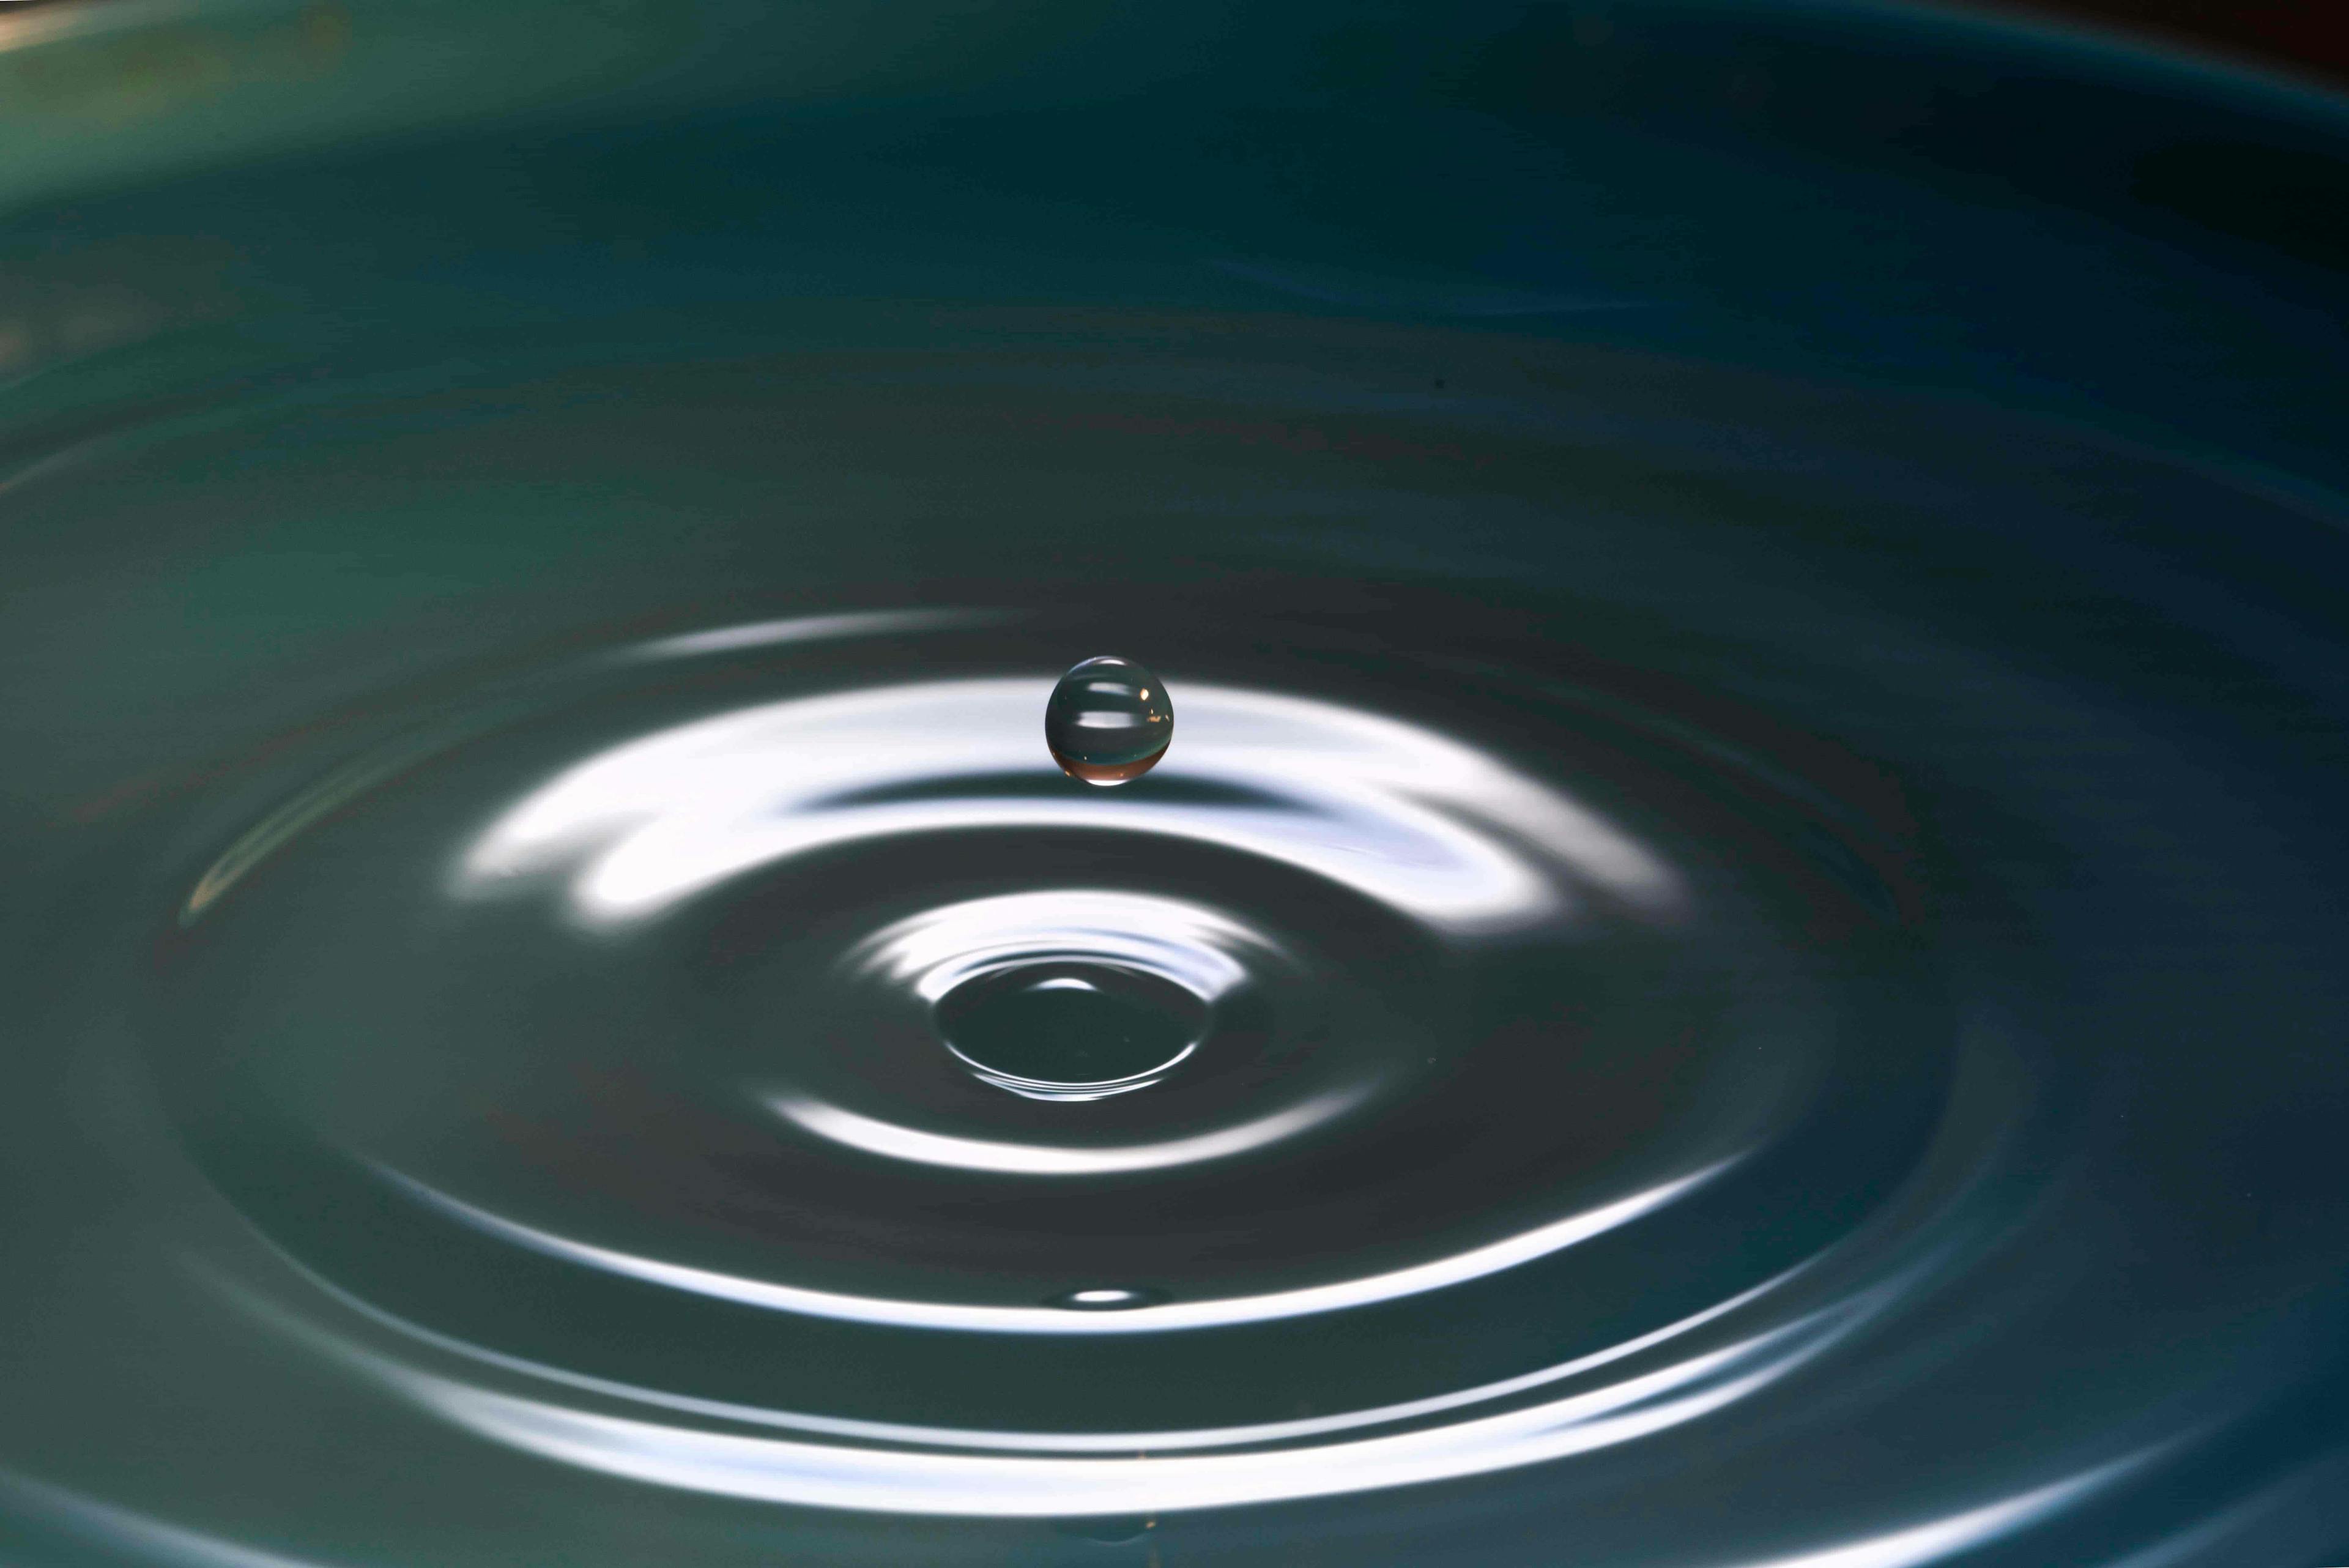 water droplet rippling